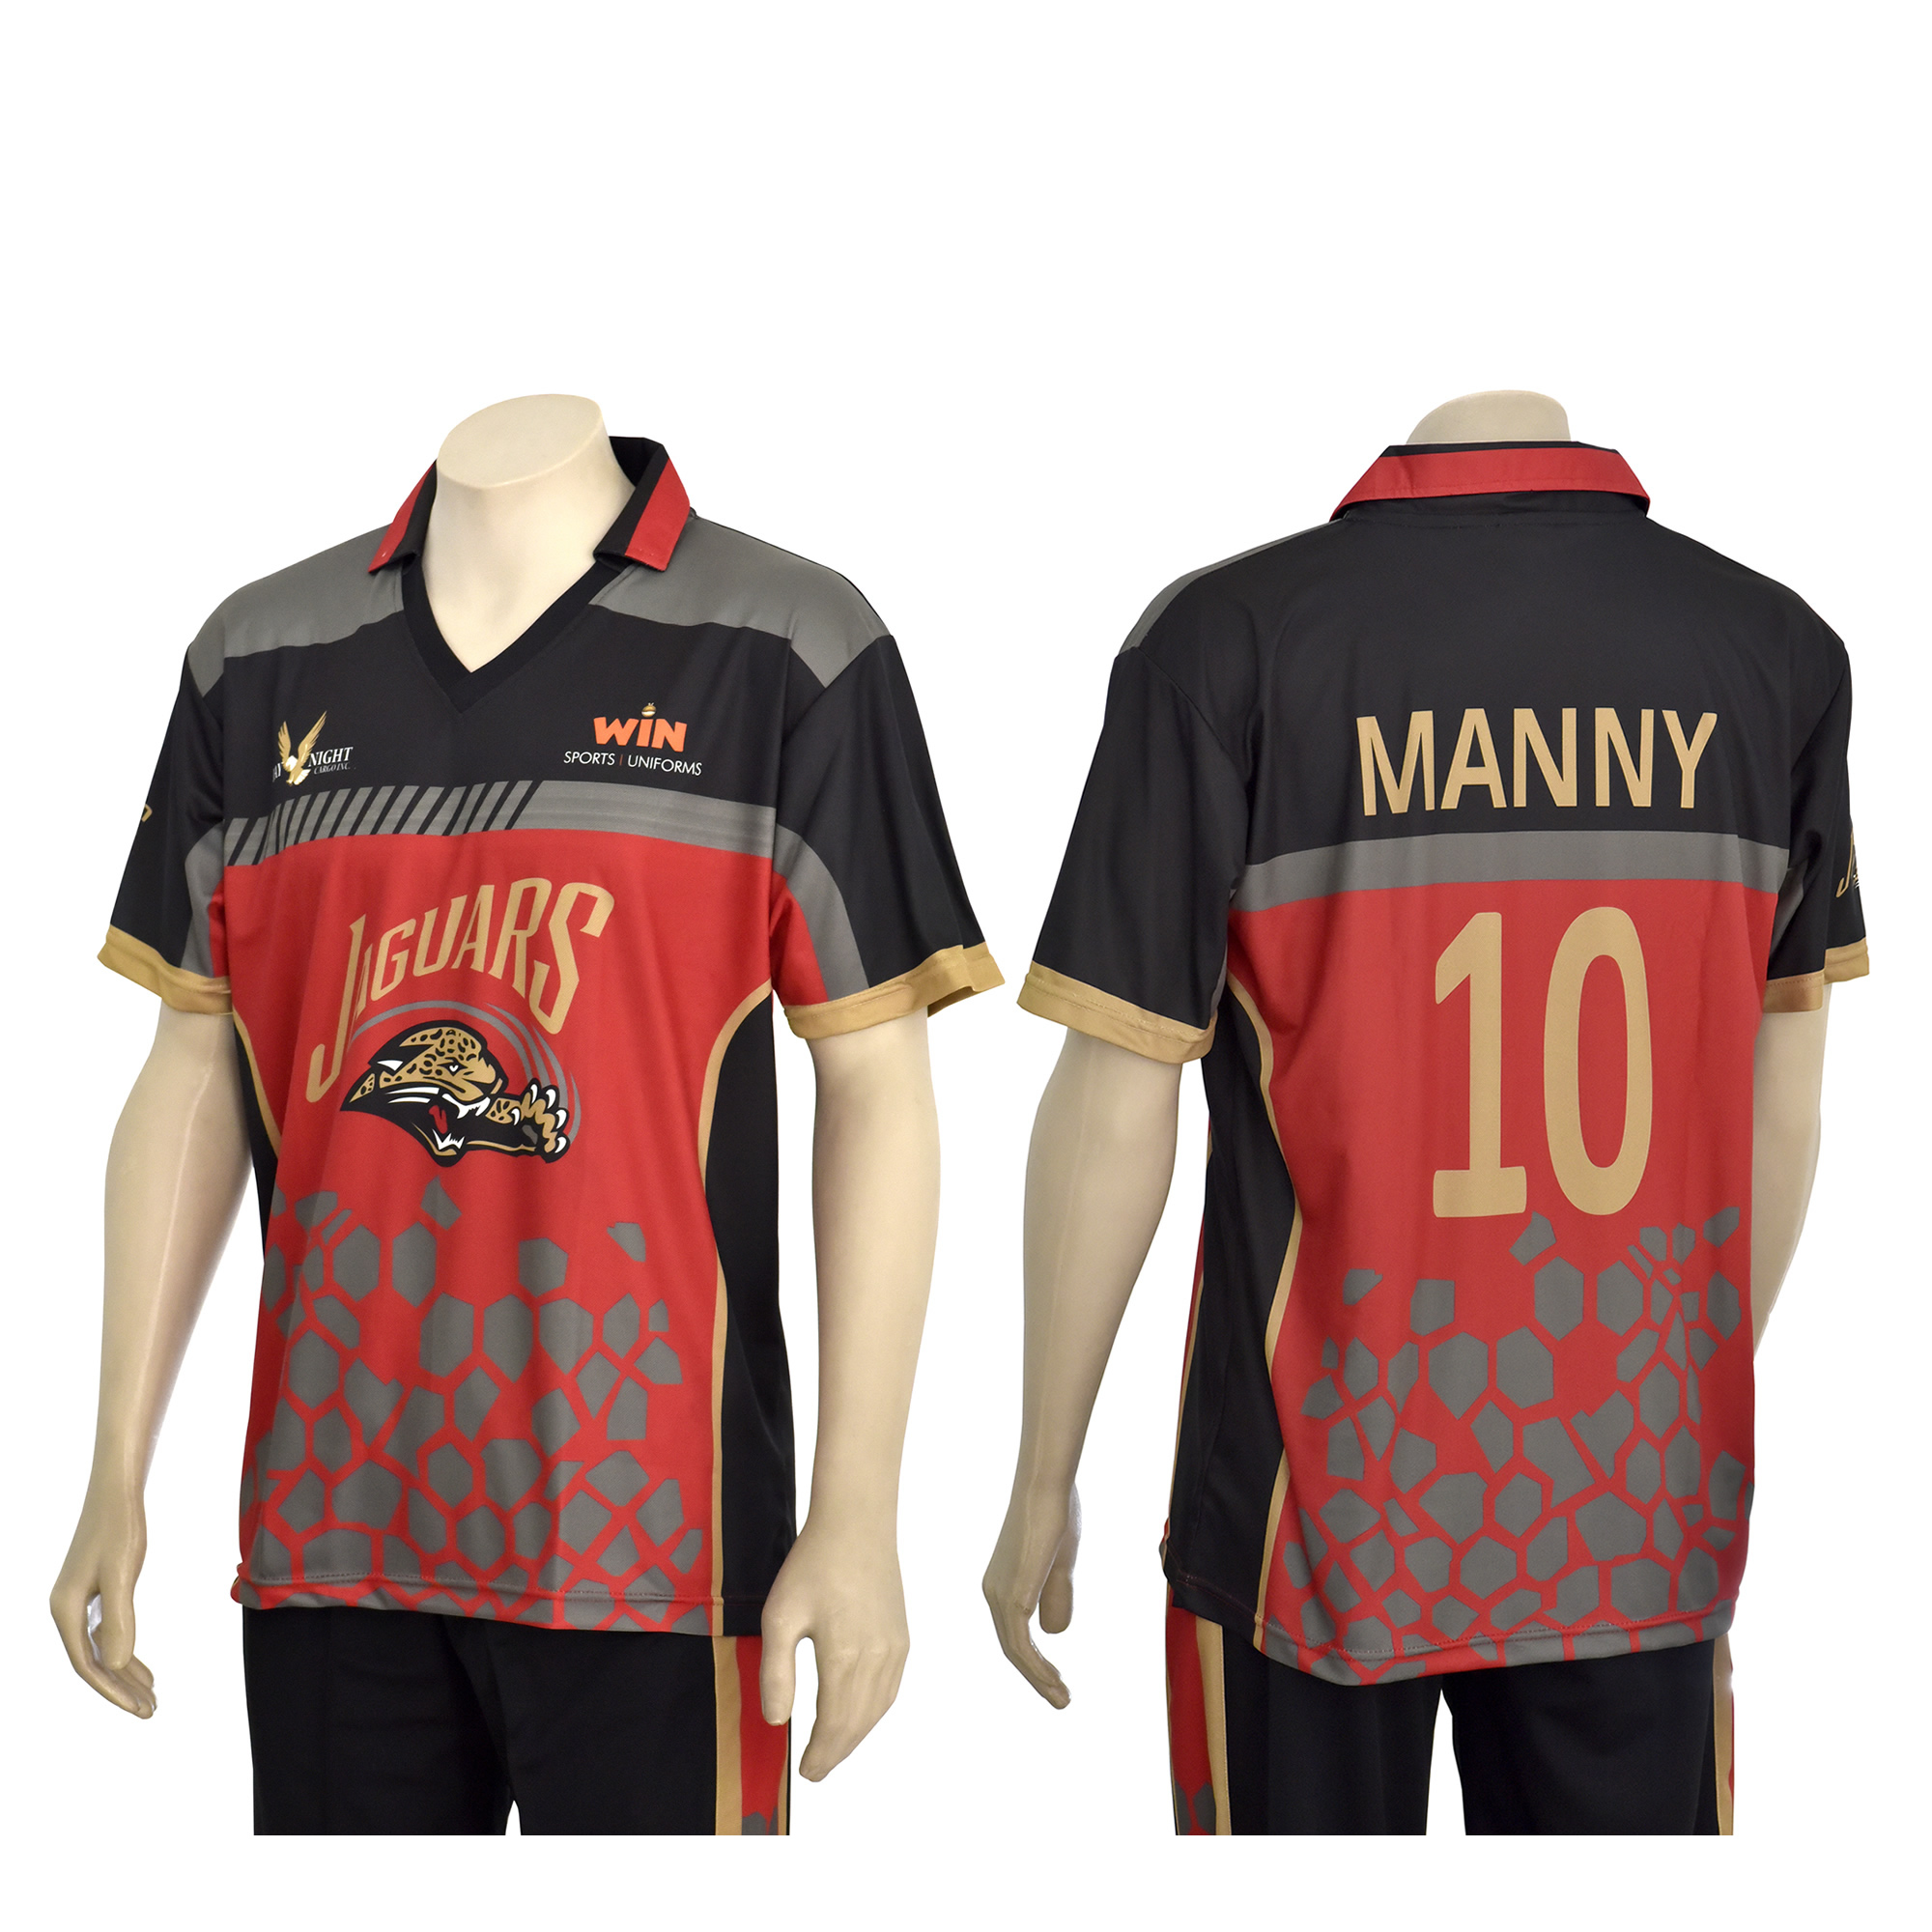 custom cricket shirts